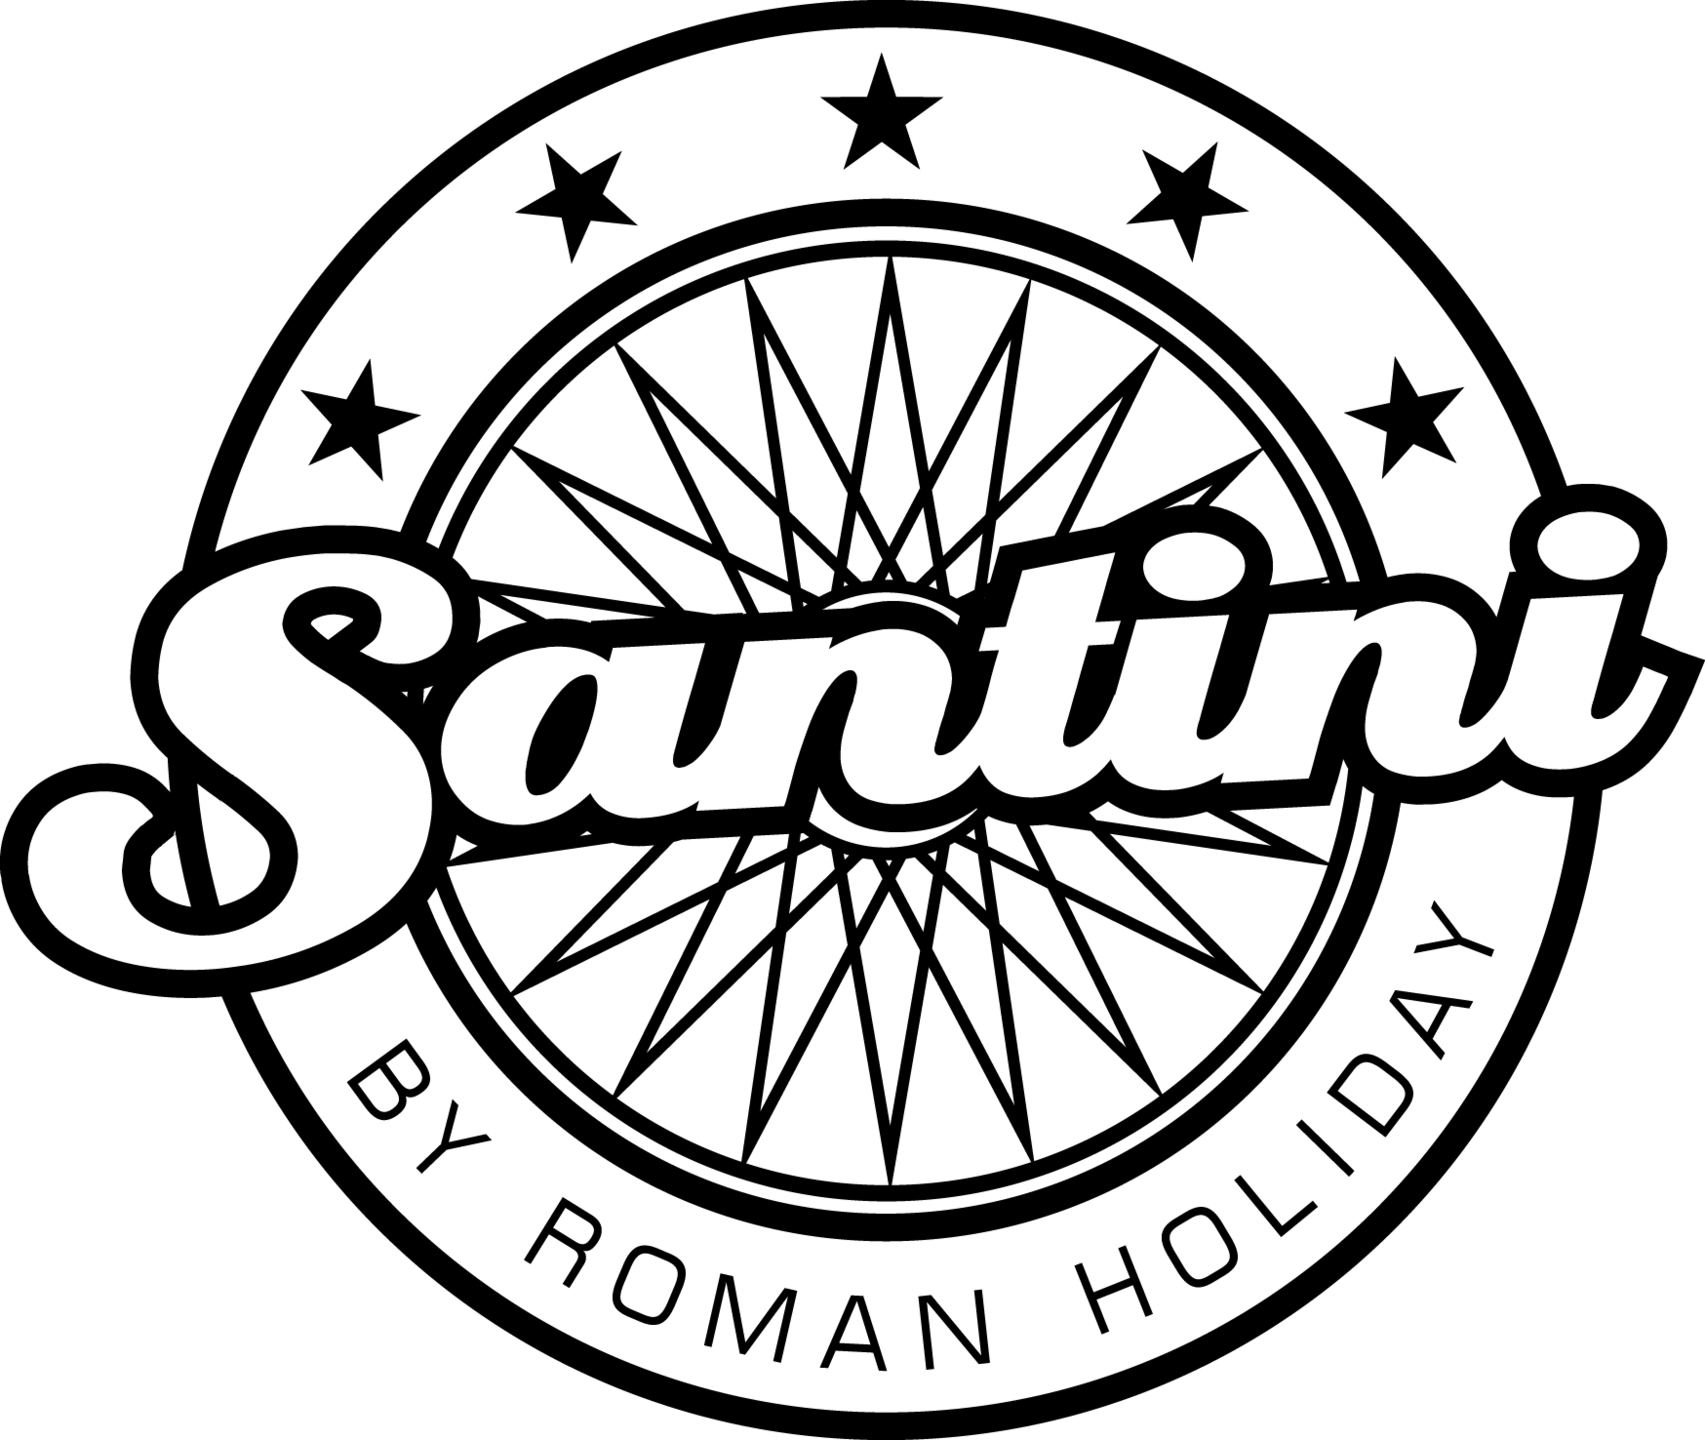 santini logo